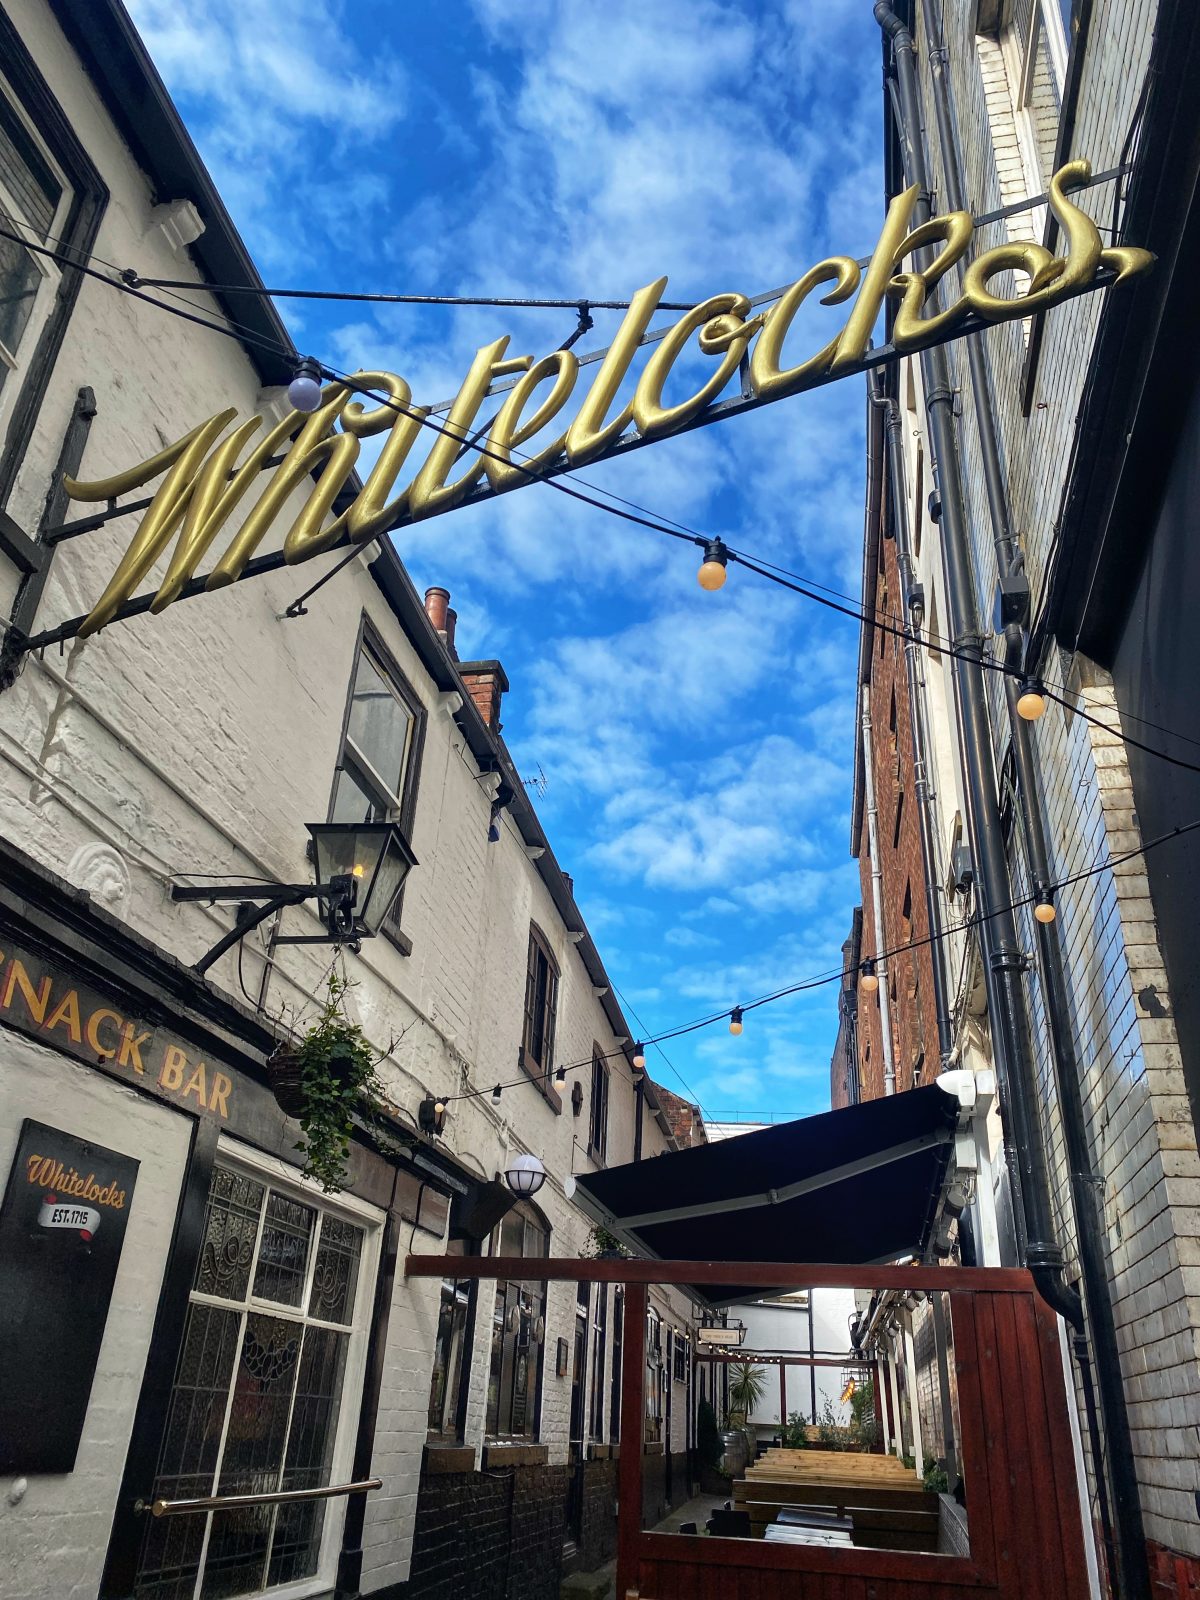 The exterior of Whitelock's in Leeds.